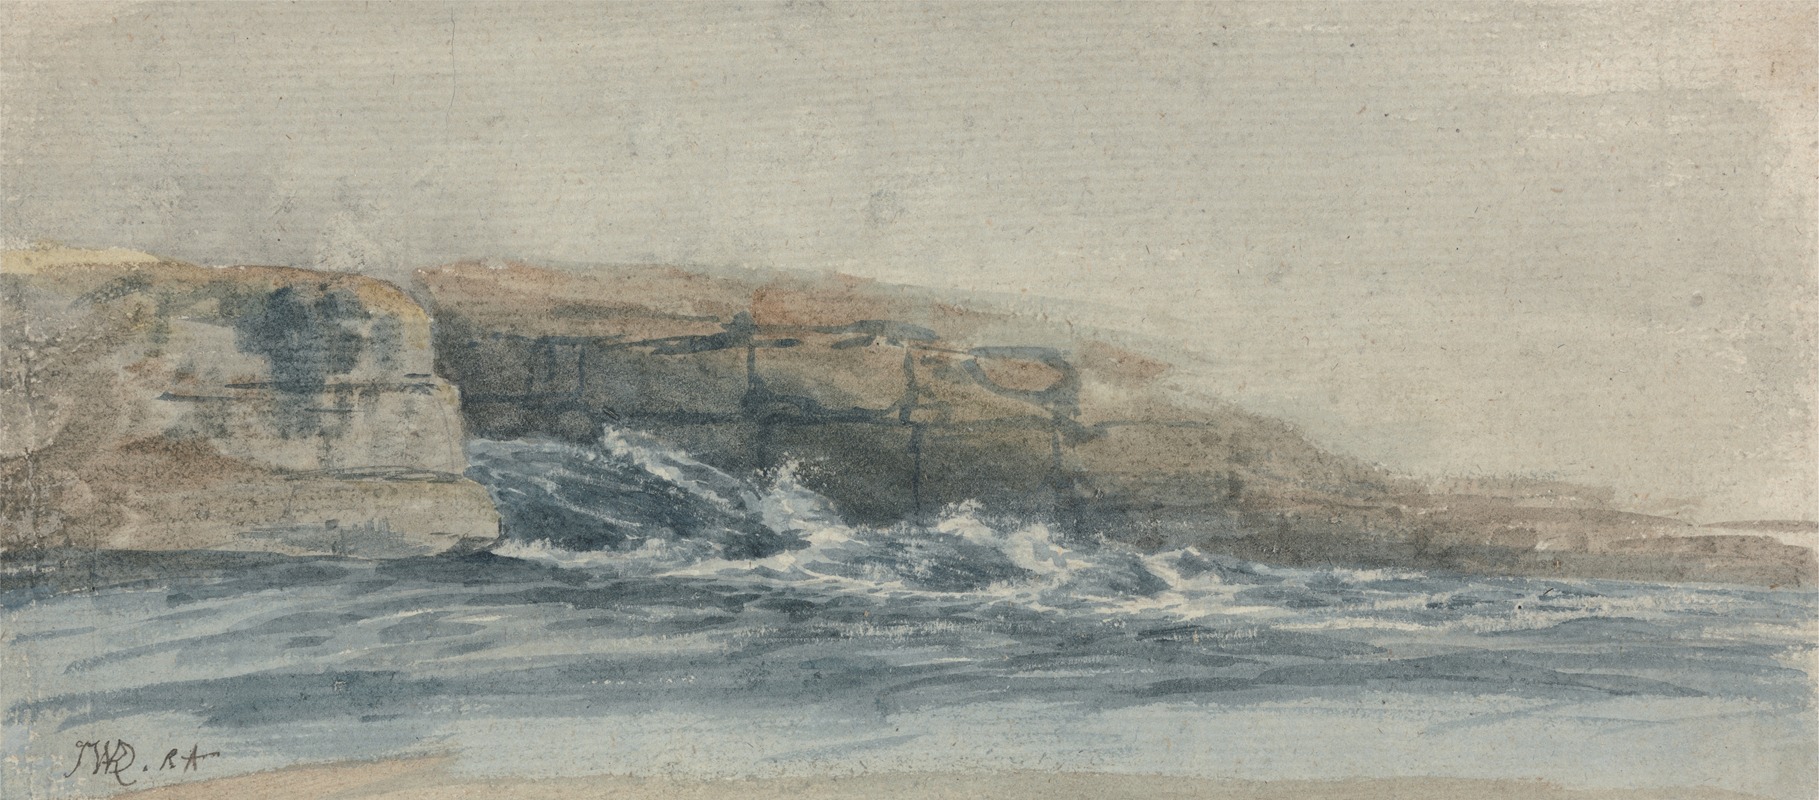 James Ward - Sea Breaking on Stony Cliffs at Left